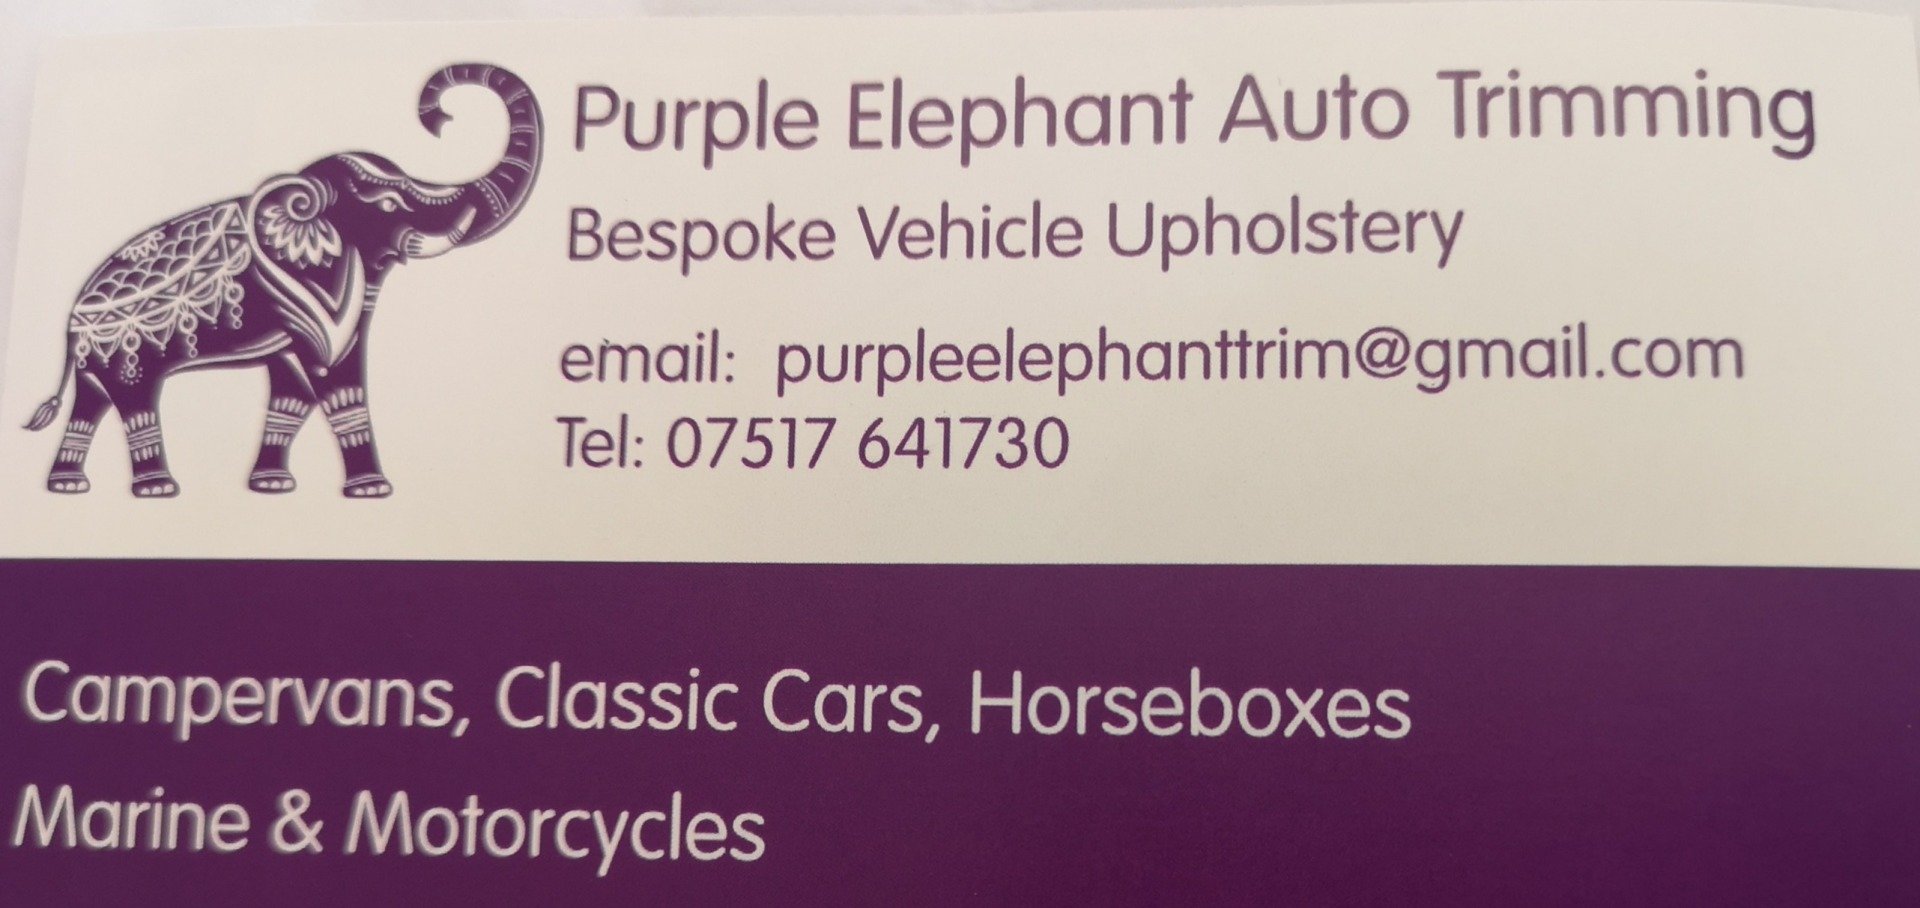 Purple Elephant Auto Trimming